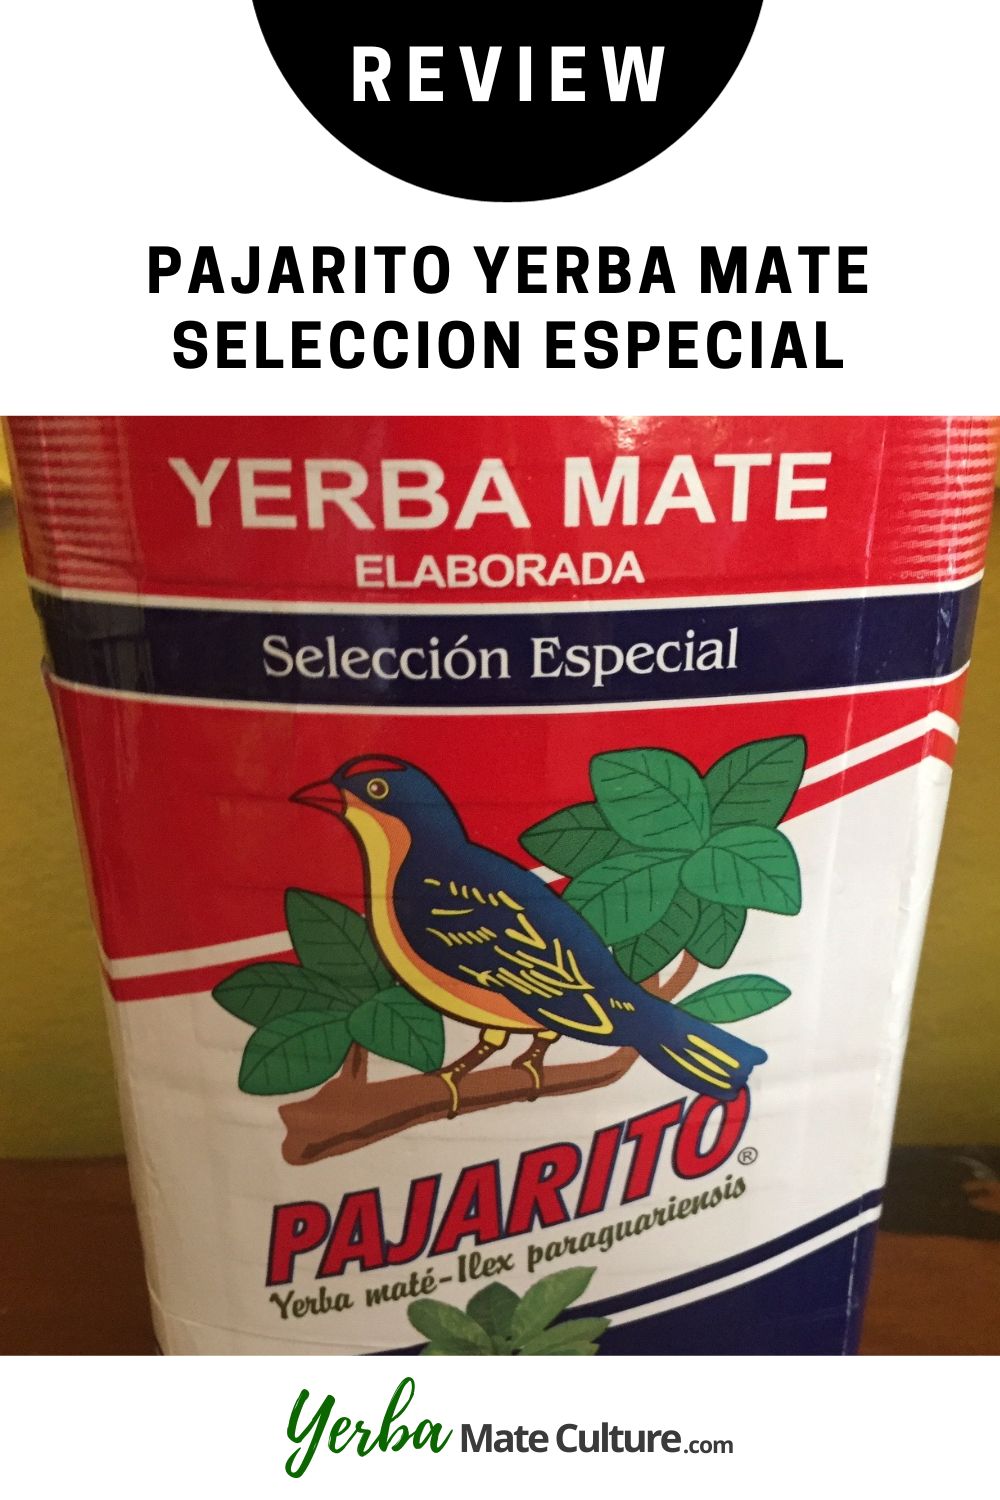 Pajarito Yerba mate review